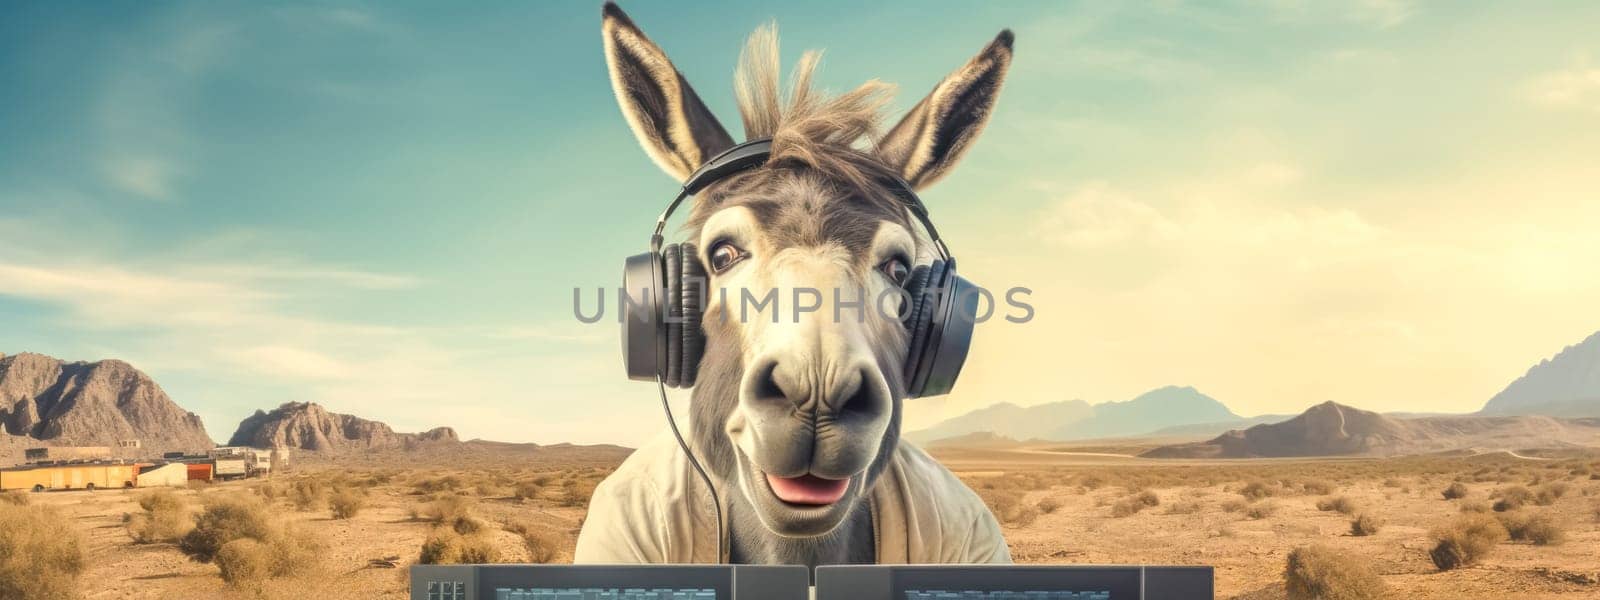 Musical donkey dj in desert landscape by Edophoto